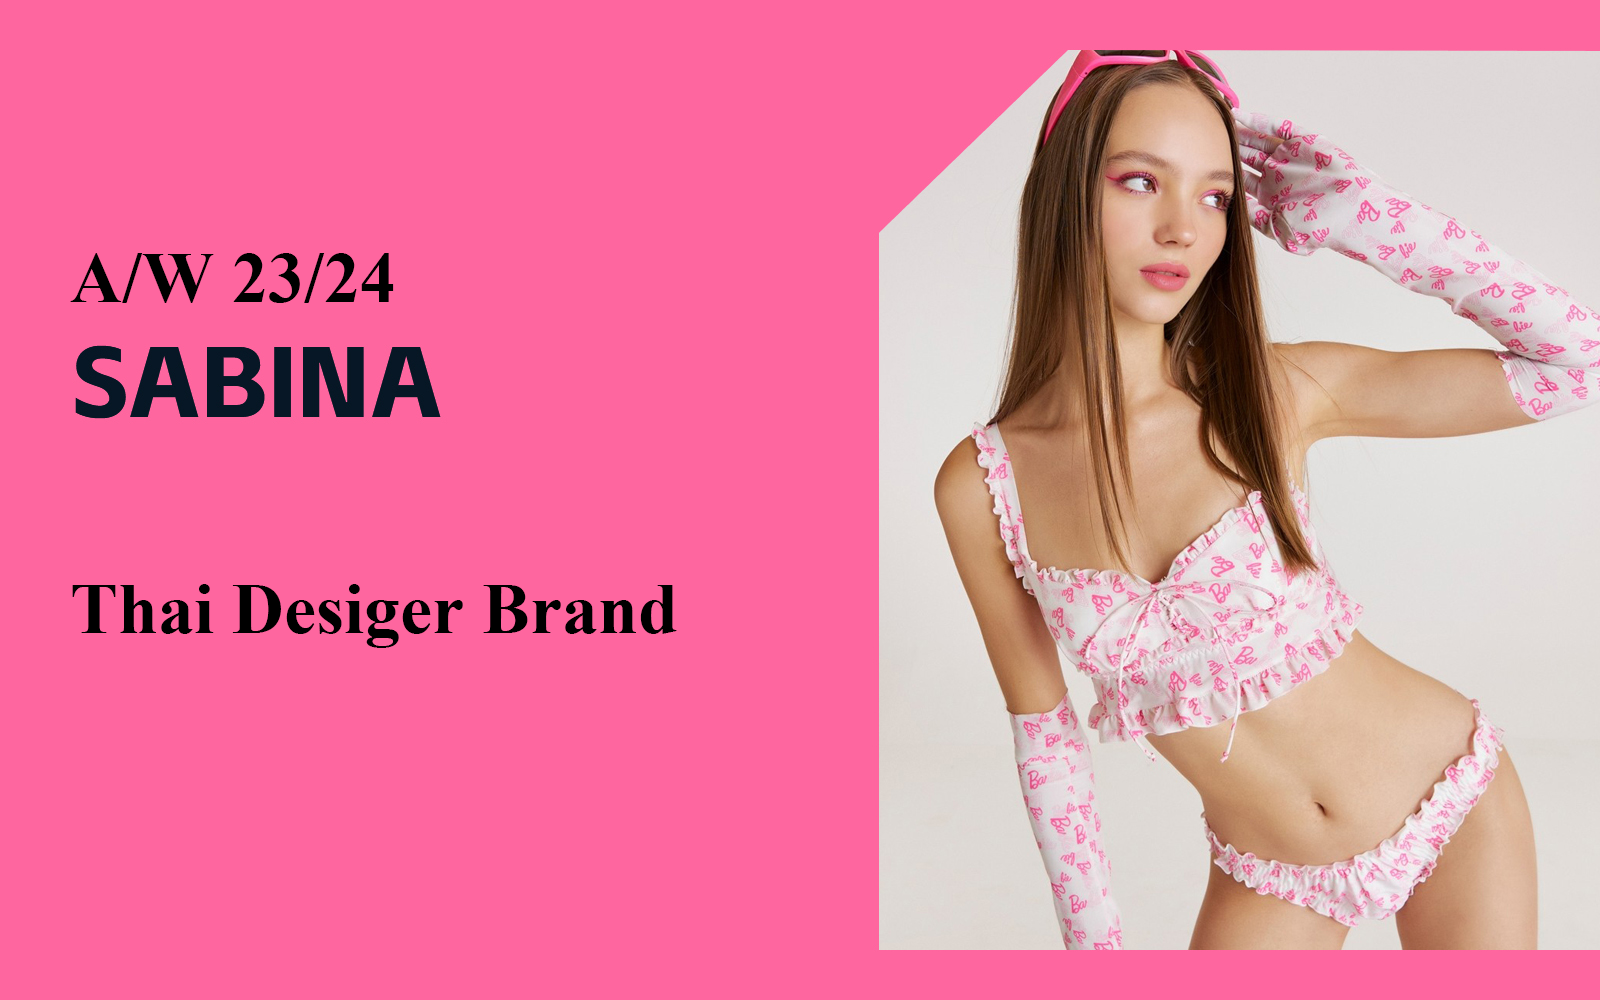 Sweet Cool Girl -- The Analysis of Sabina The Lingerie Designer Brand